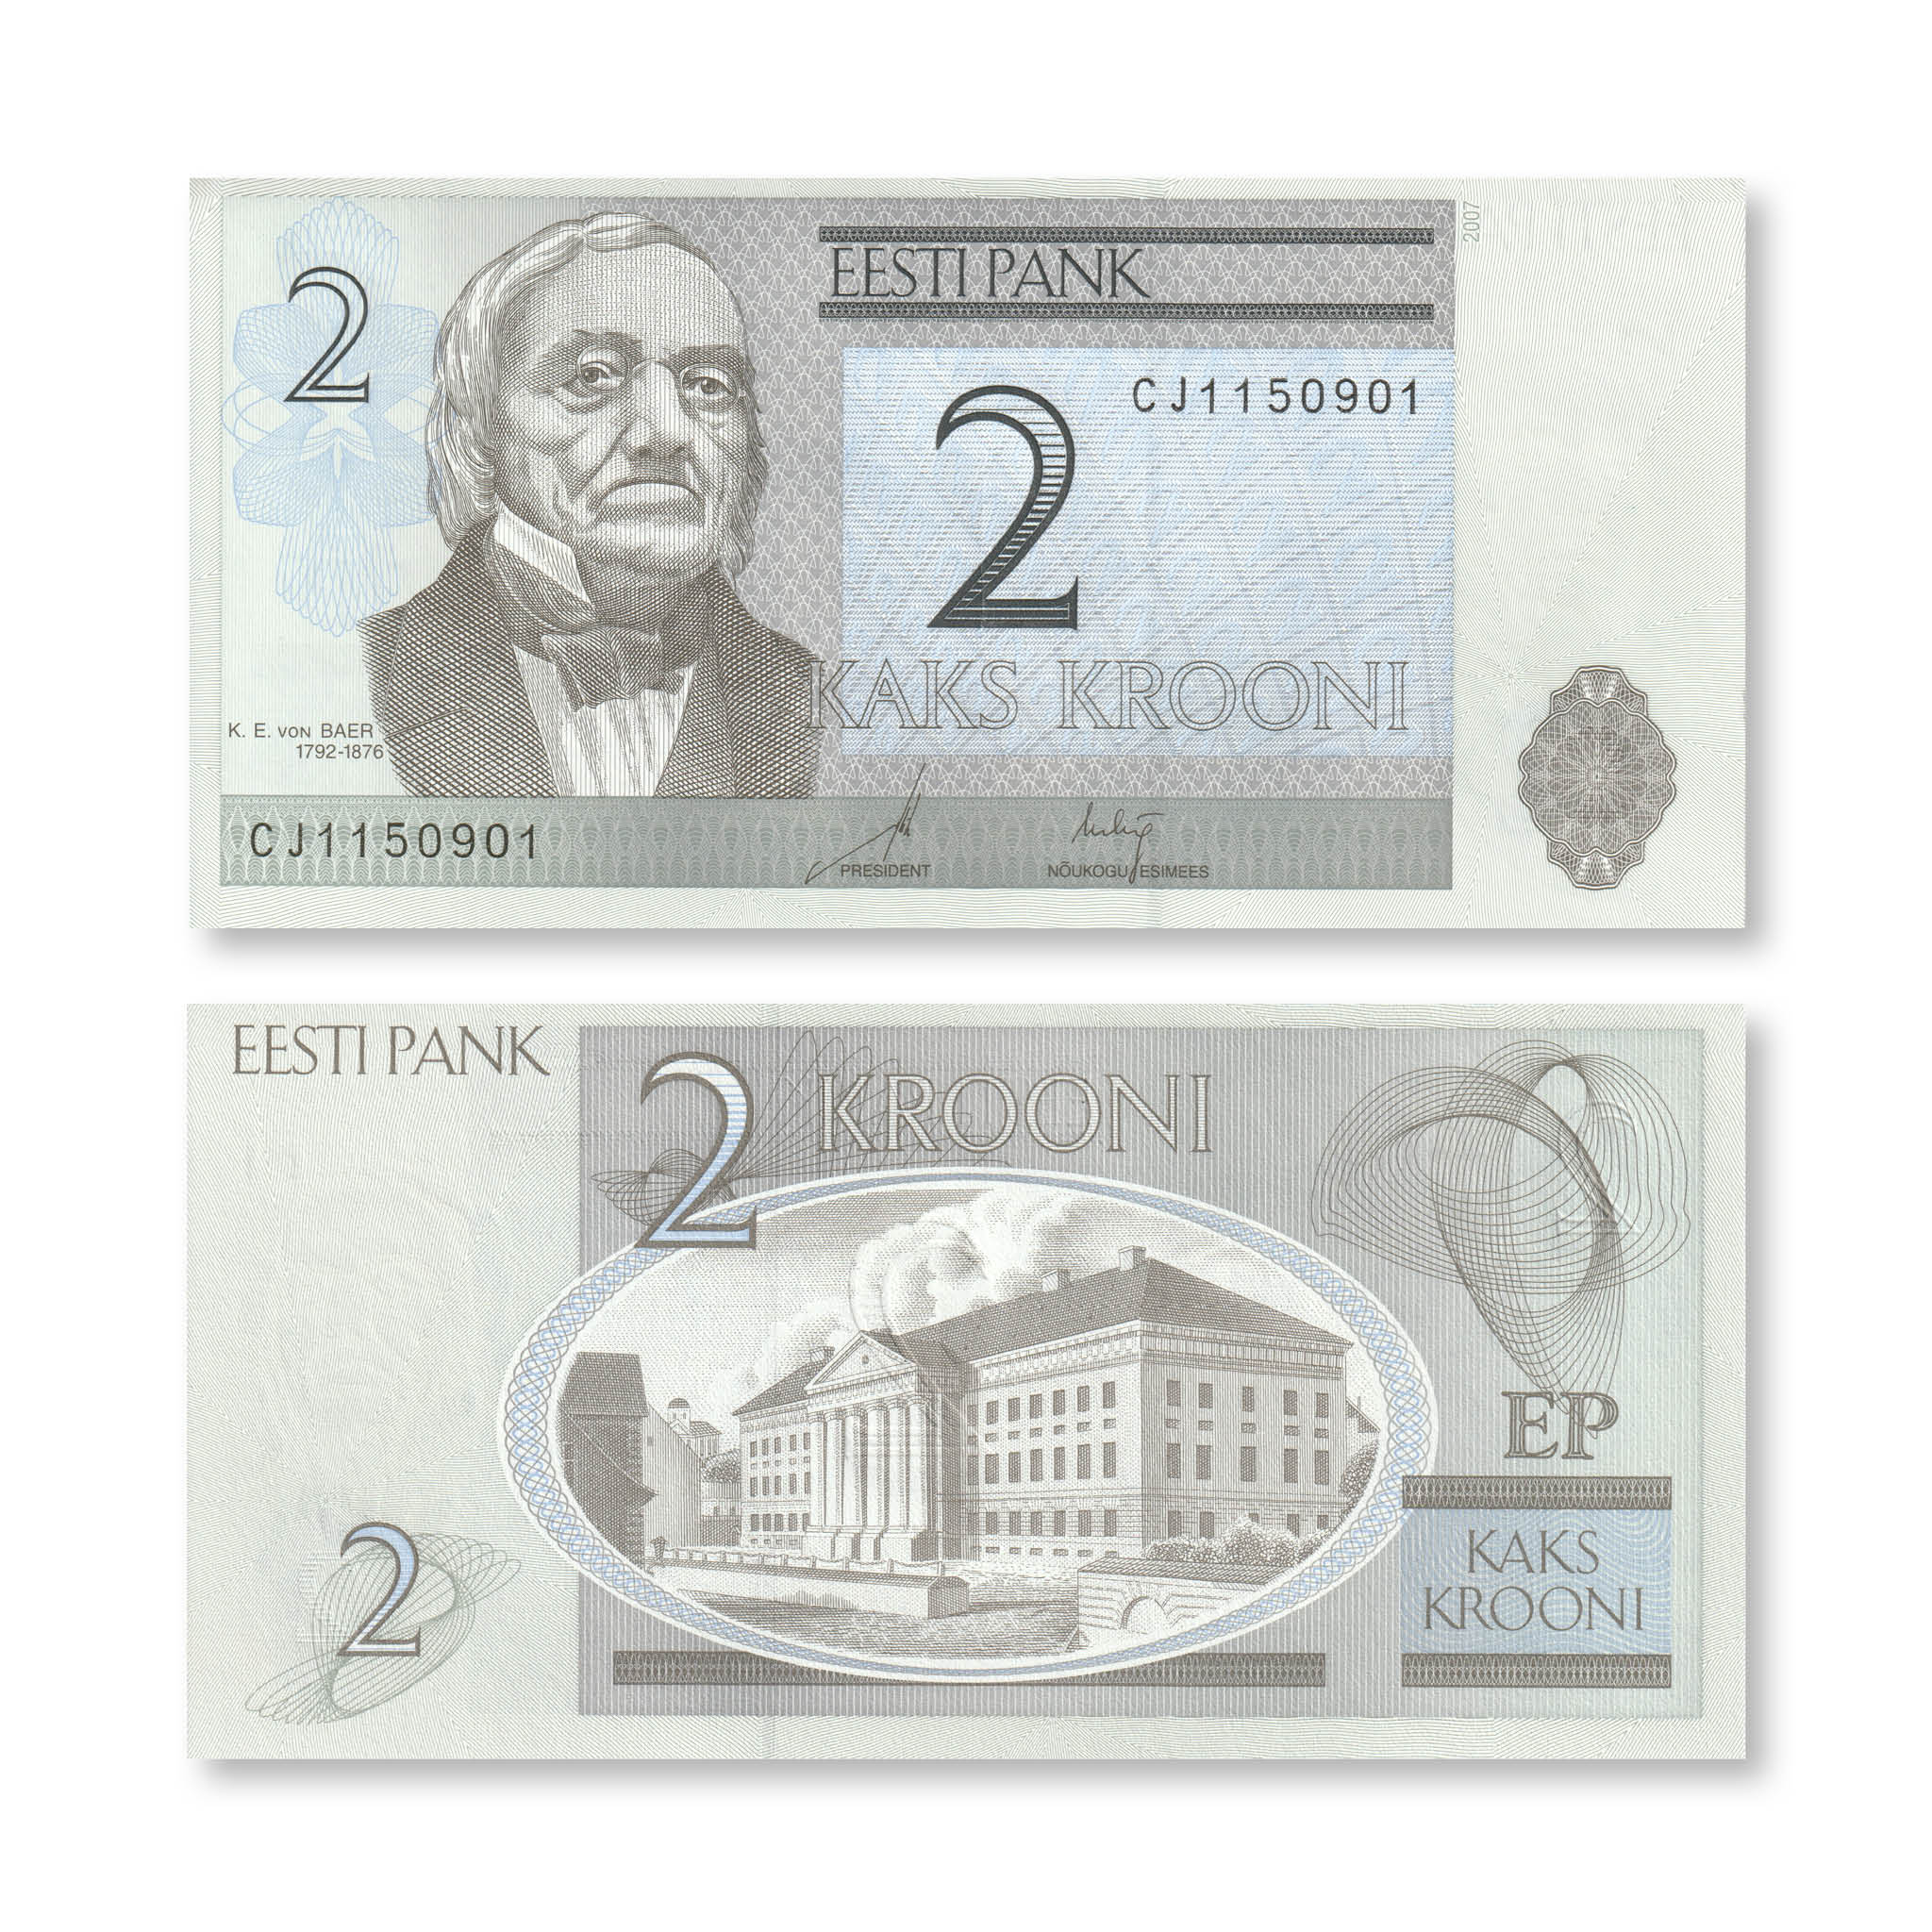 Estonia 2 Krooni, 2007, B227b, P85b, UNC - Robert's World Money - World Banknotes